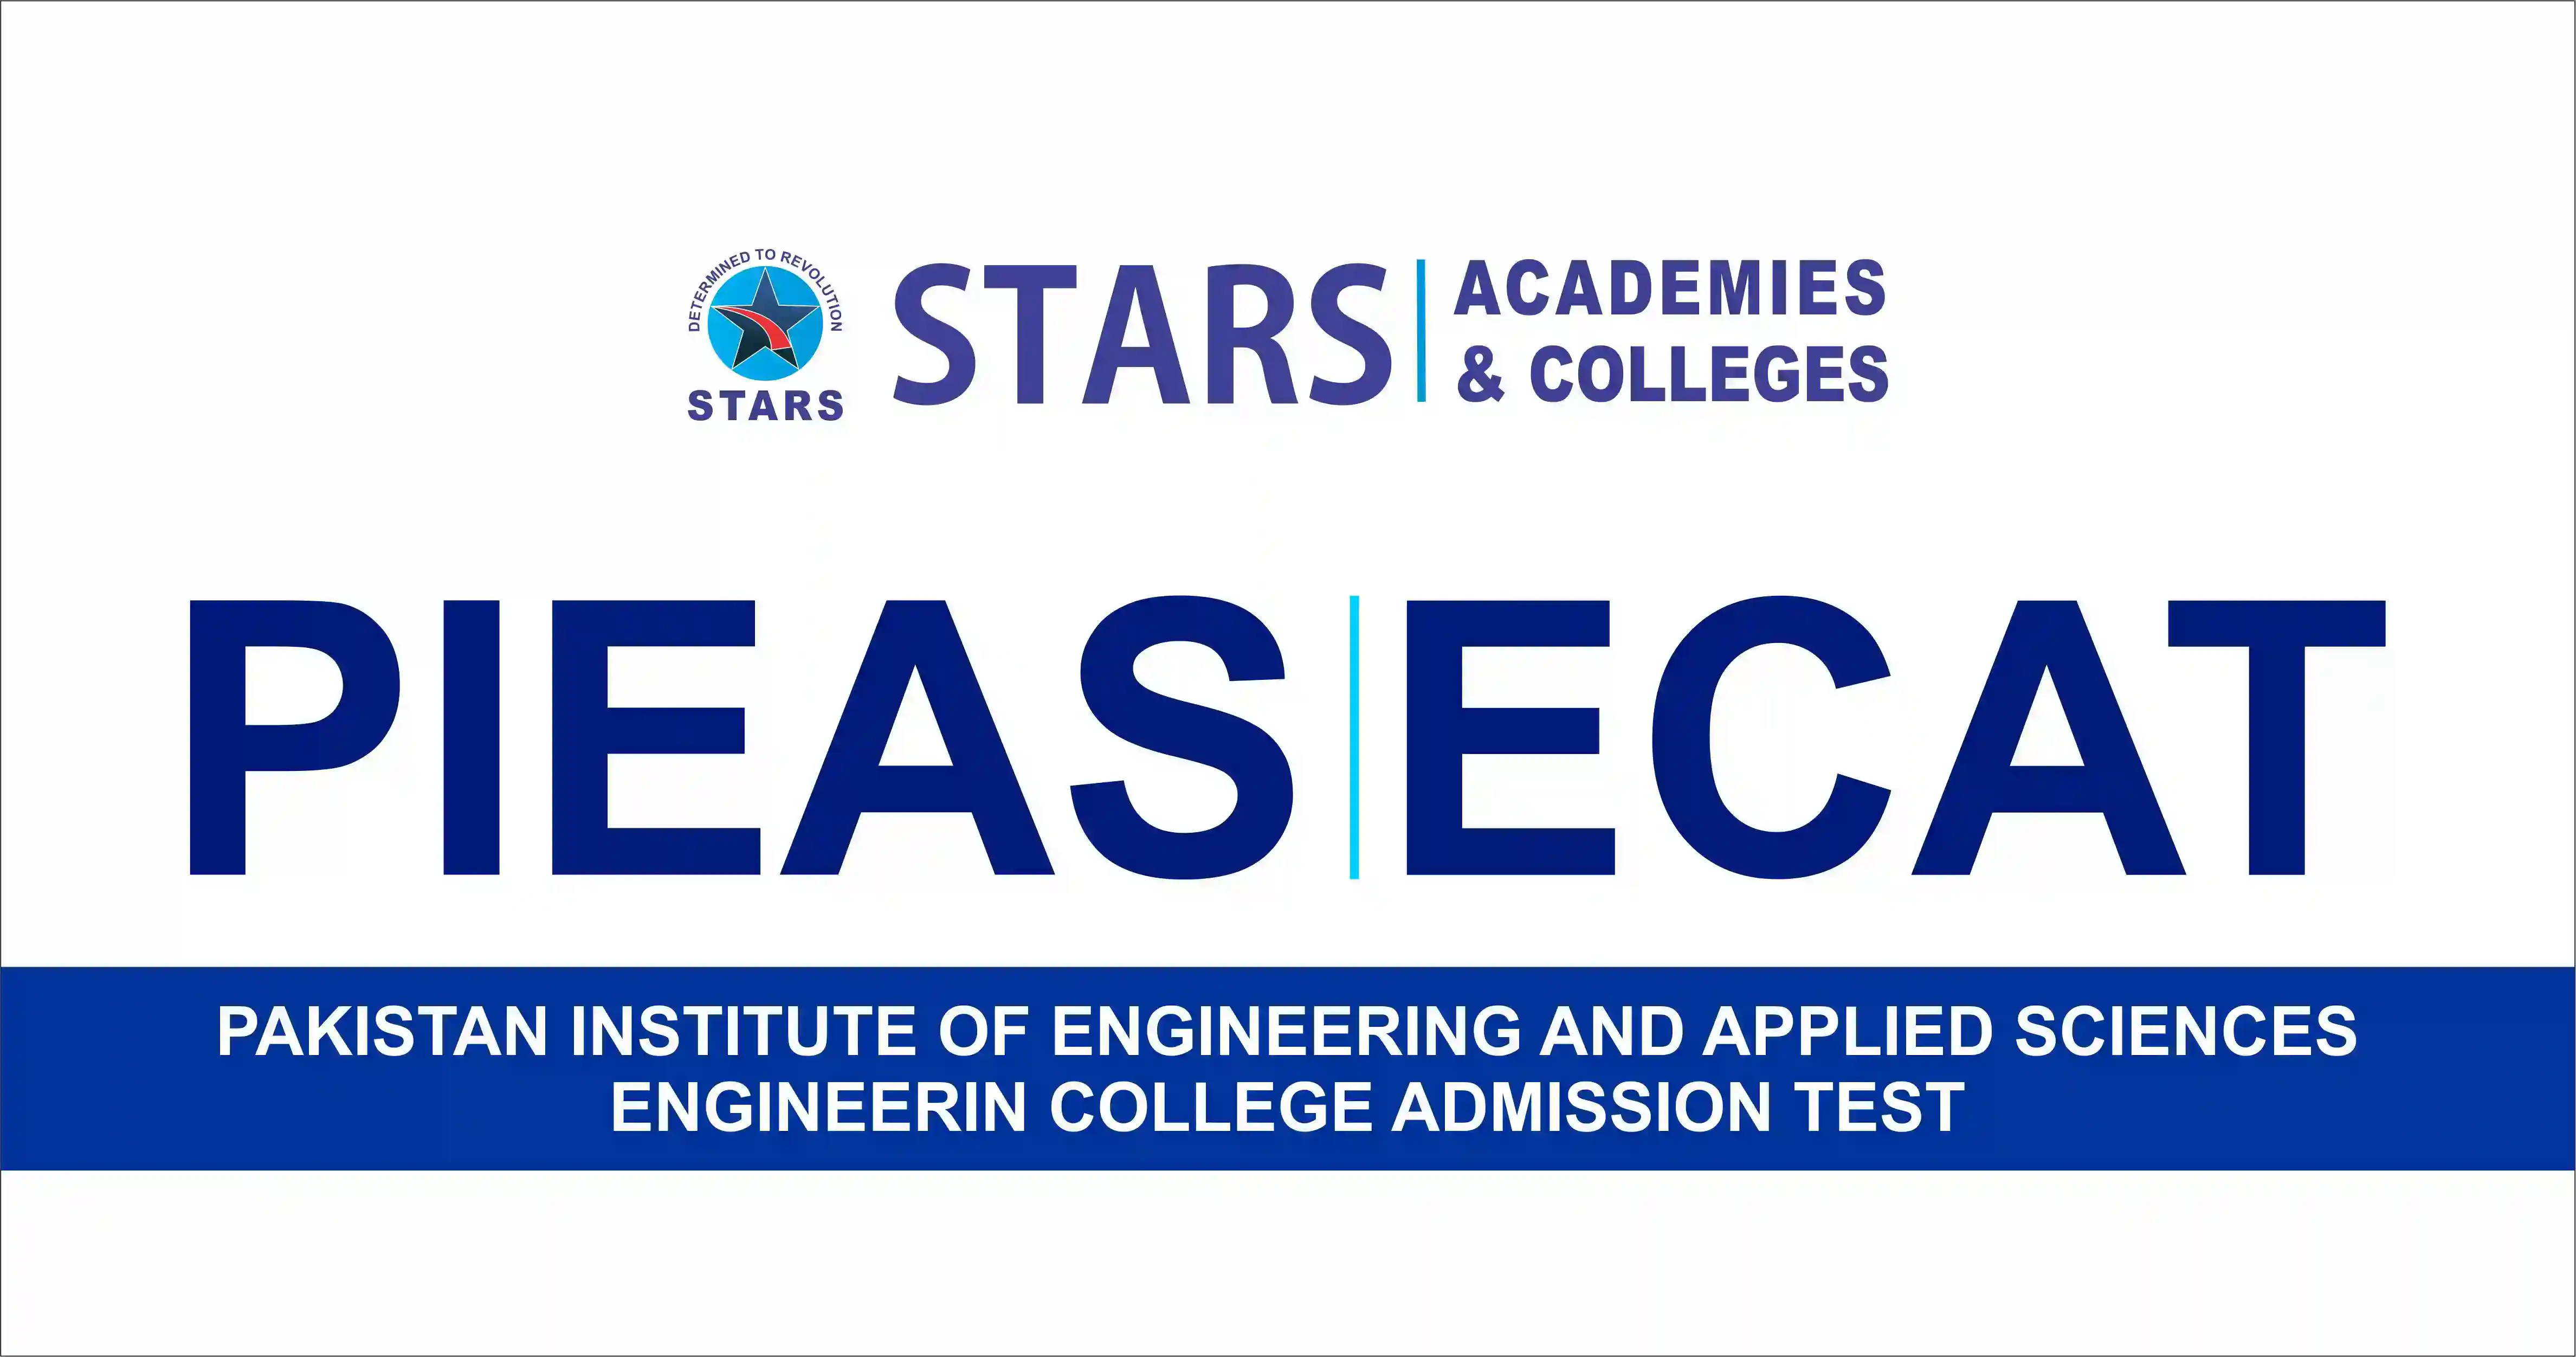 Stars Academy PIEAS Information